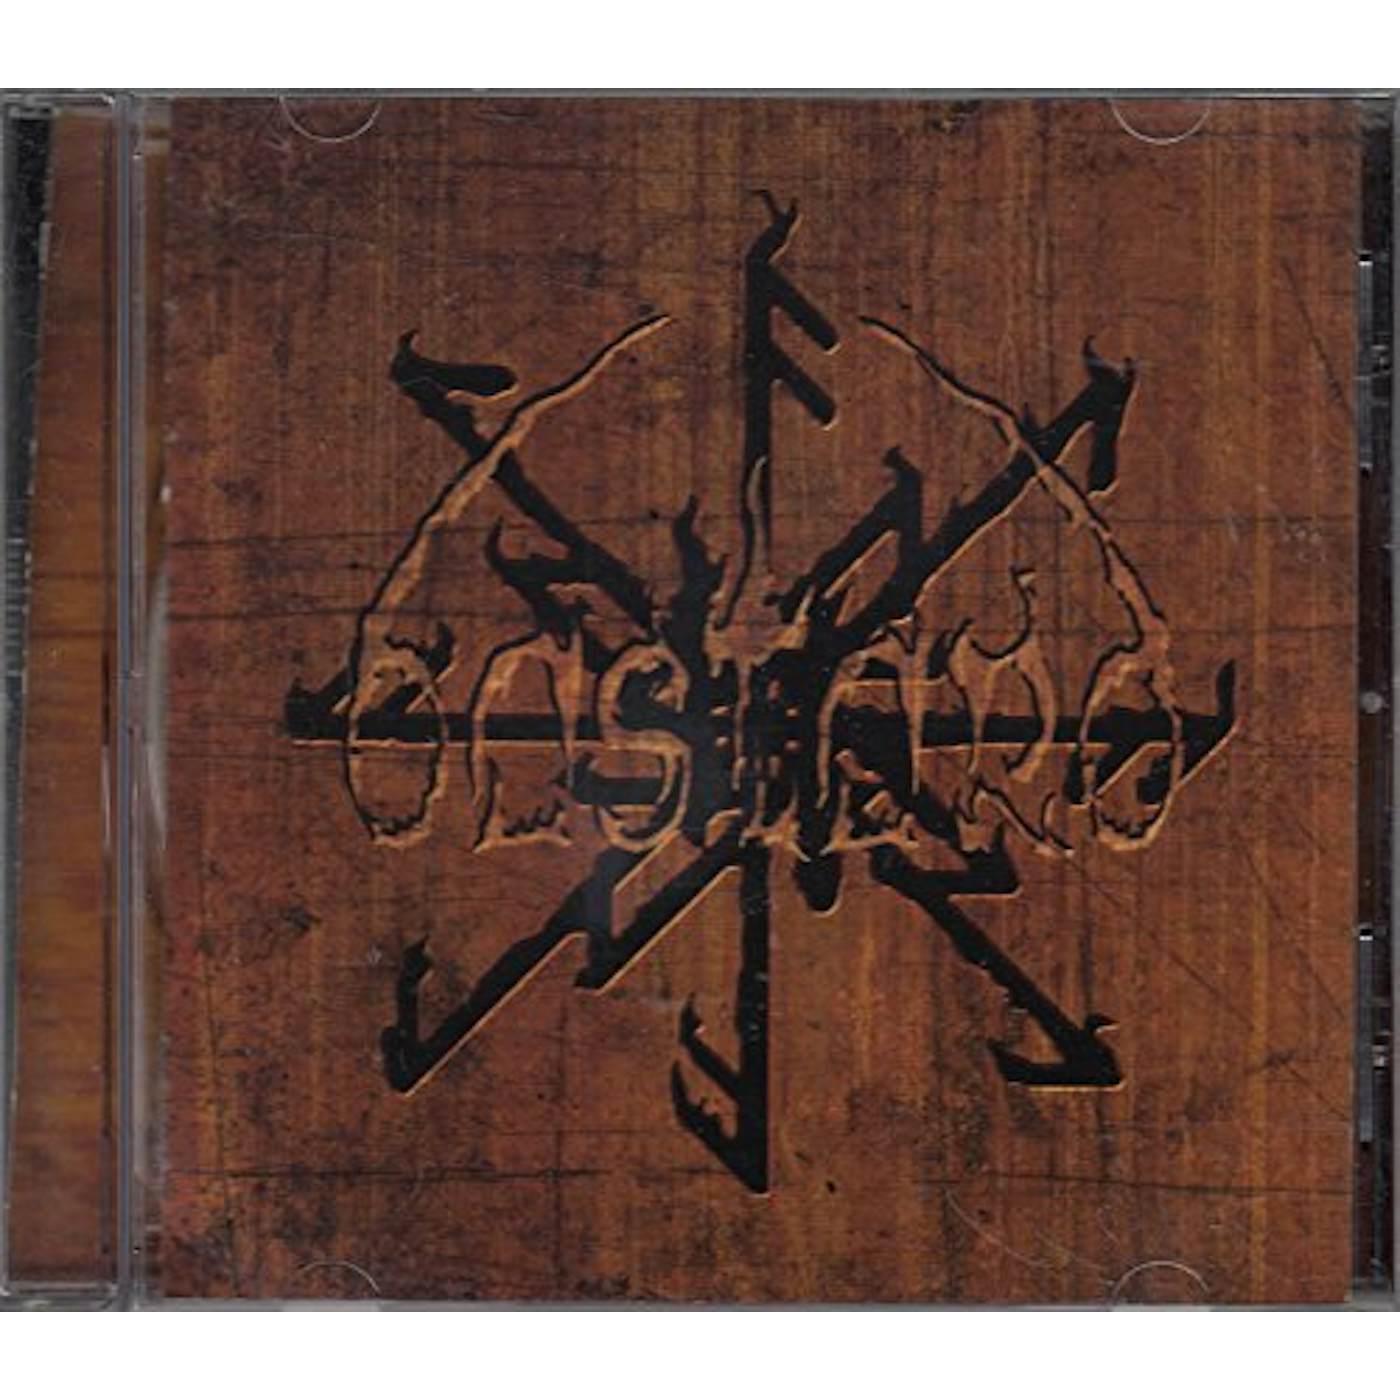 Bastard DEMENTIA & FILTH CD